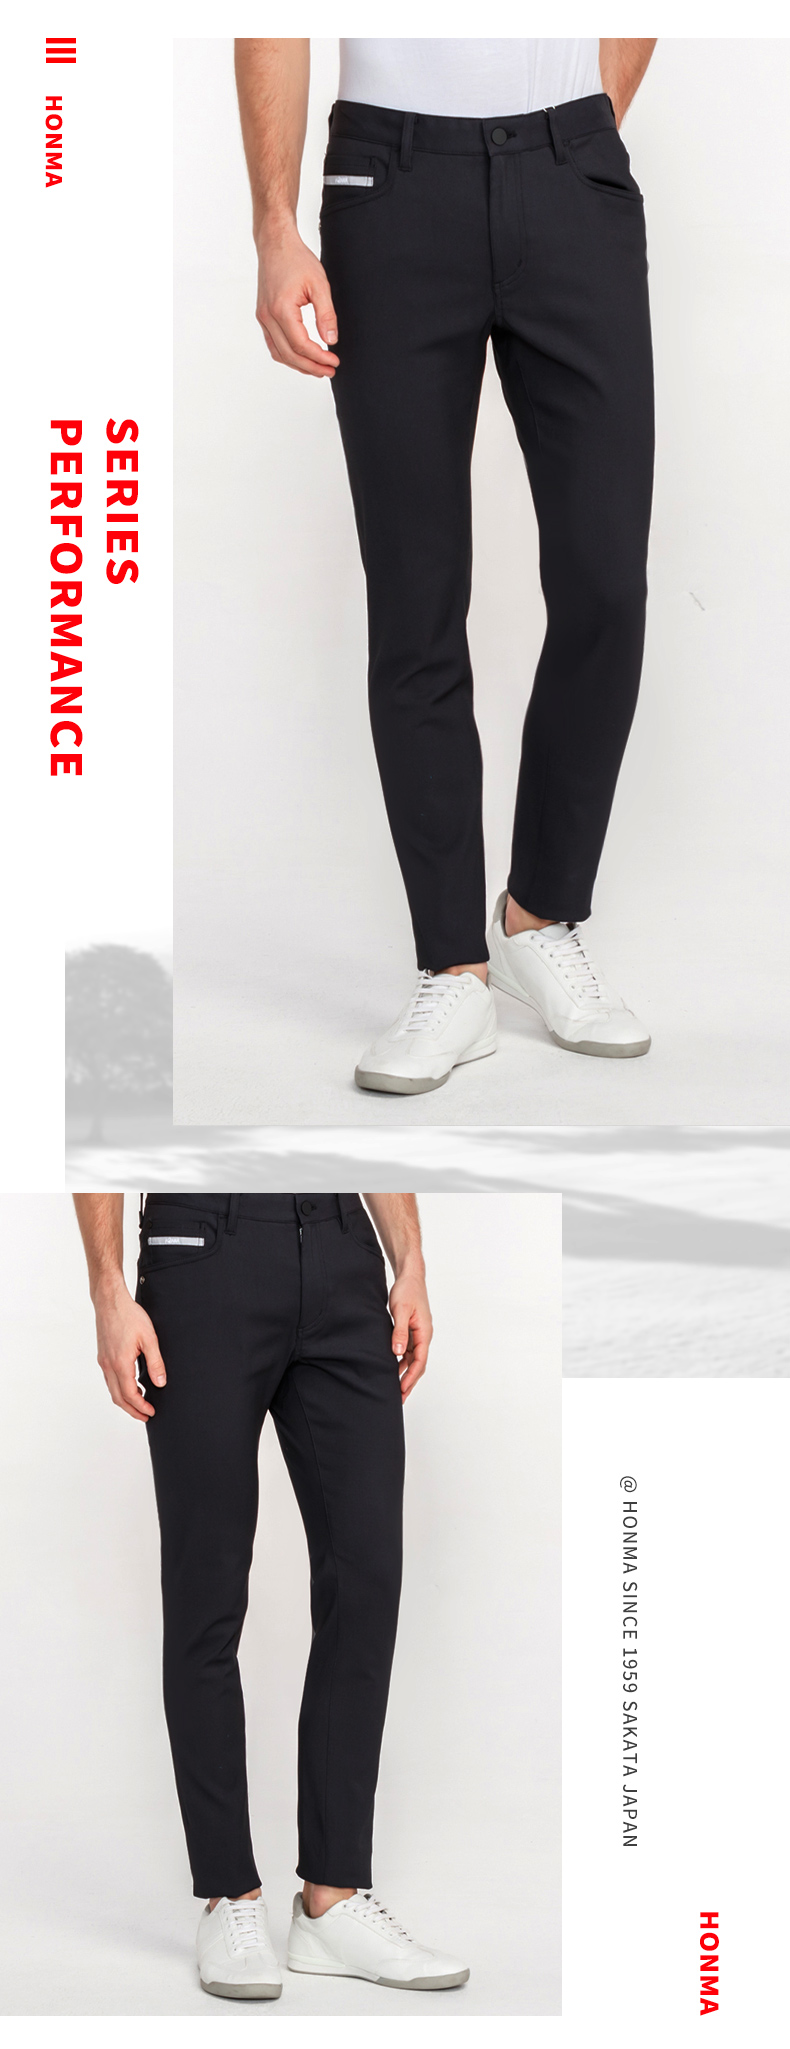 HONMA新款高尔夫男子长裤防滑条简约口袋服帖修身有型